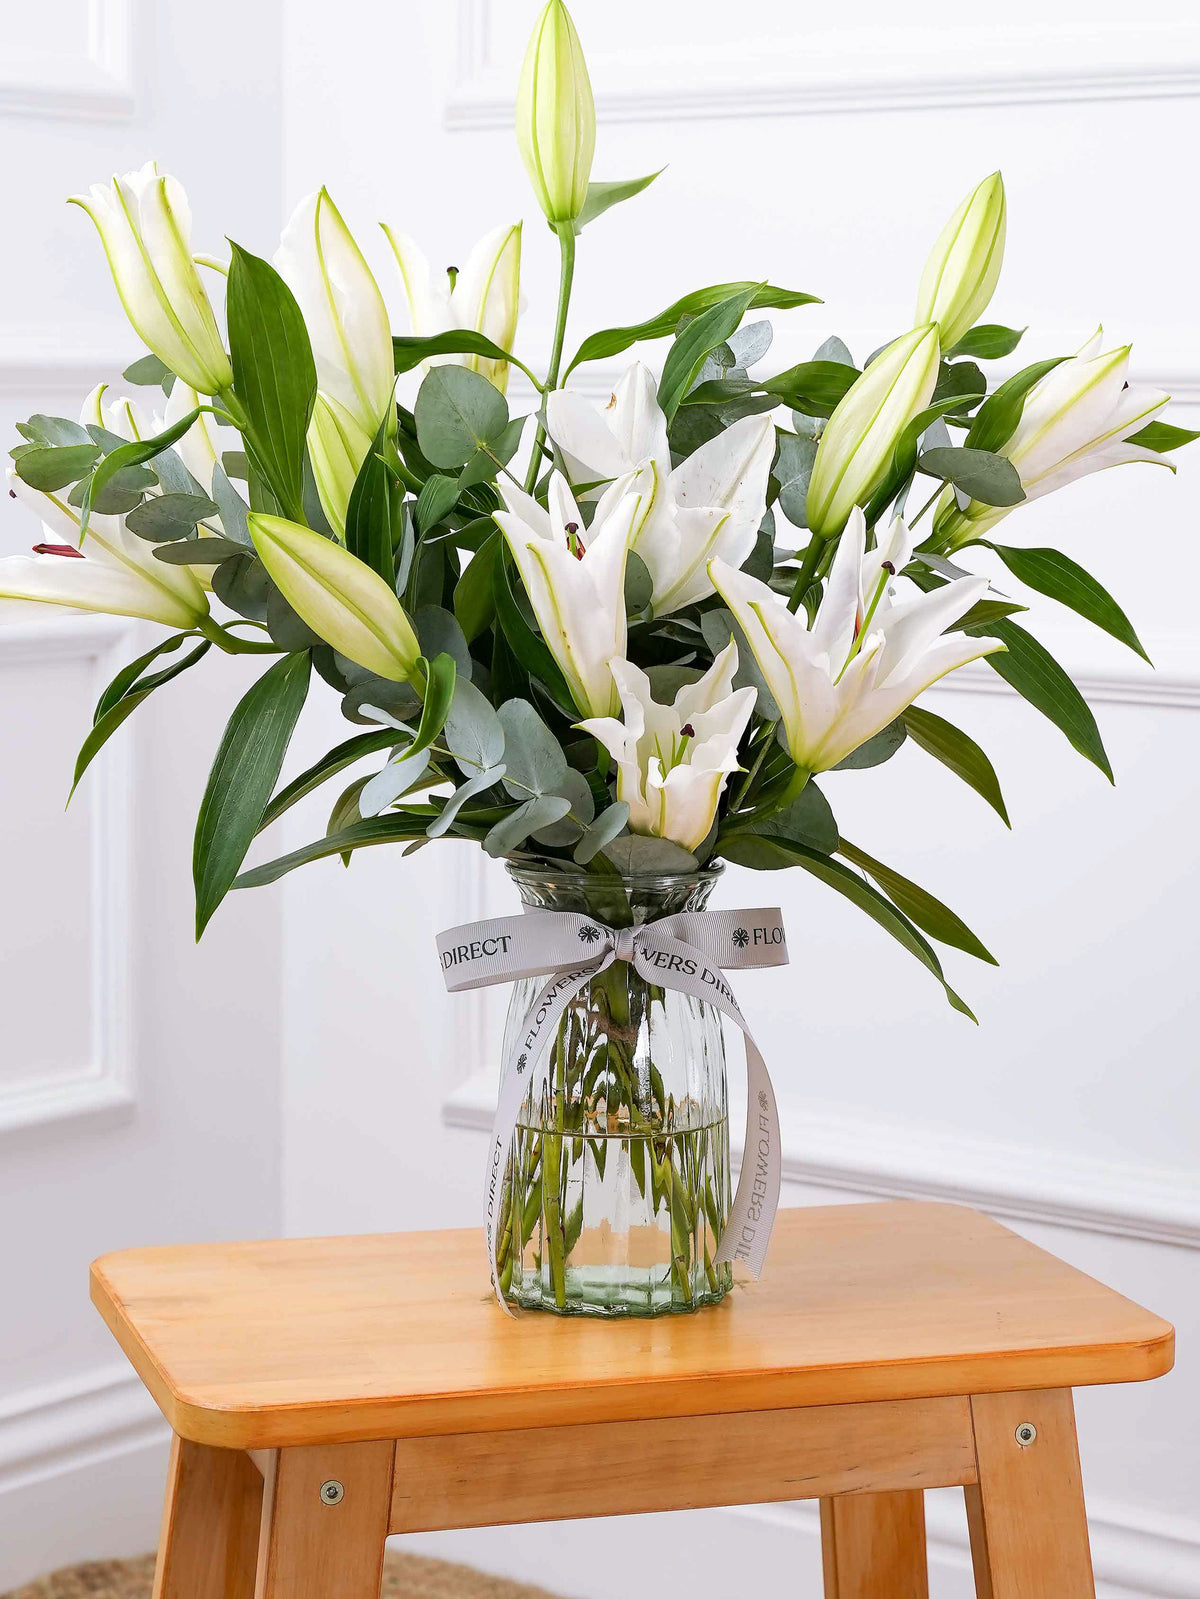 Sympathy White Lily in a vase